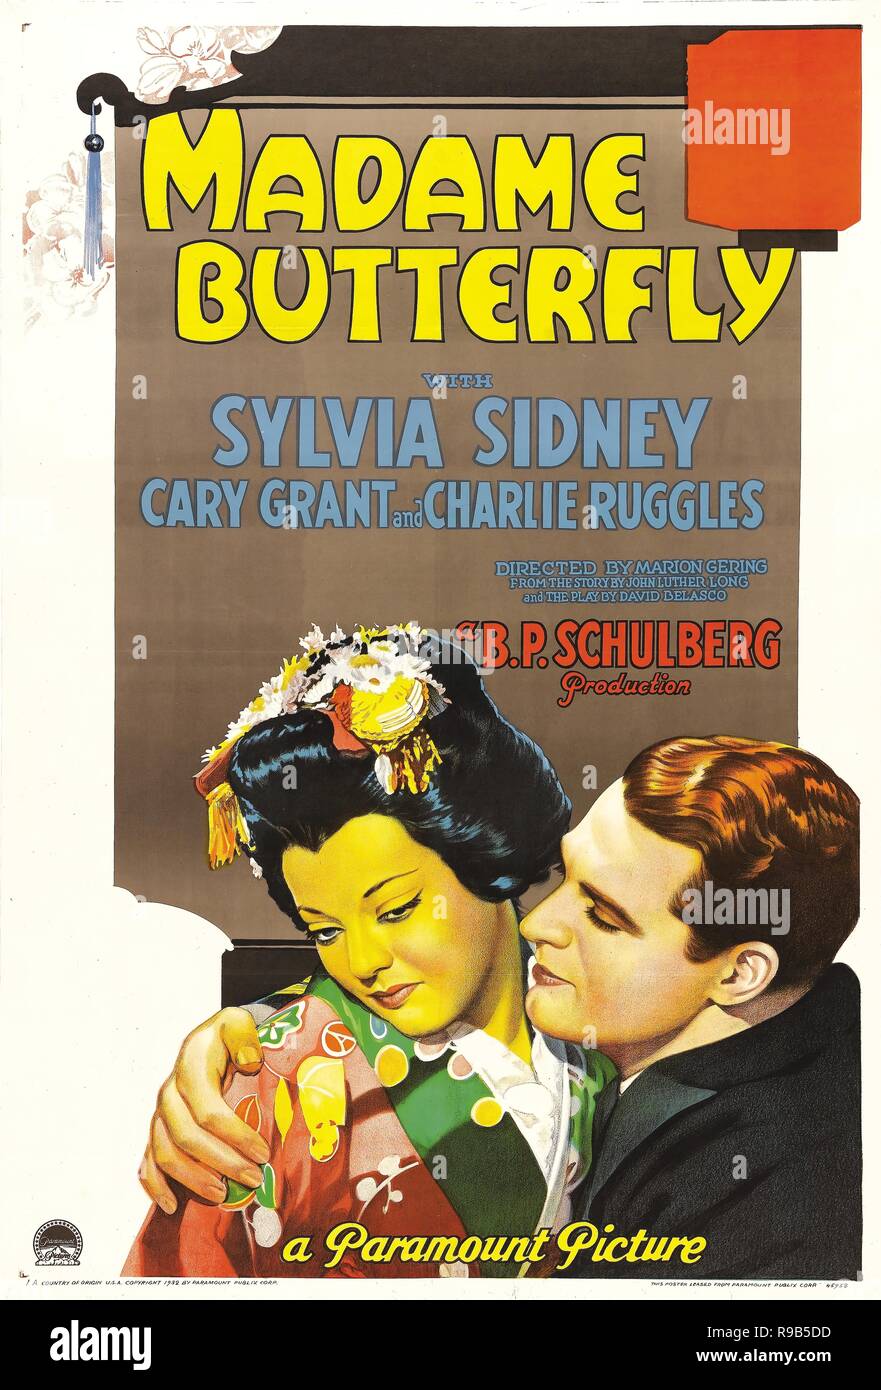 Original Film Titel: MADAME BUTTERFLY. Englischer Titel: MADAME BUTTERFLY. Jahr: 1932. Regie: MARION GERING. Quelle: Paramount Pictures/Album Stockfoto